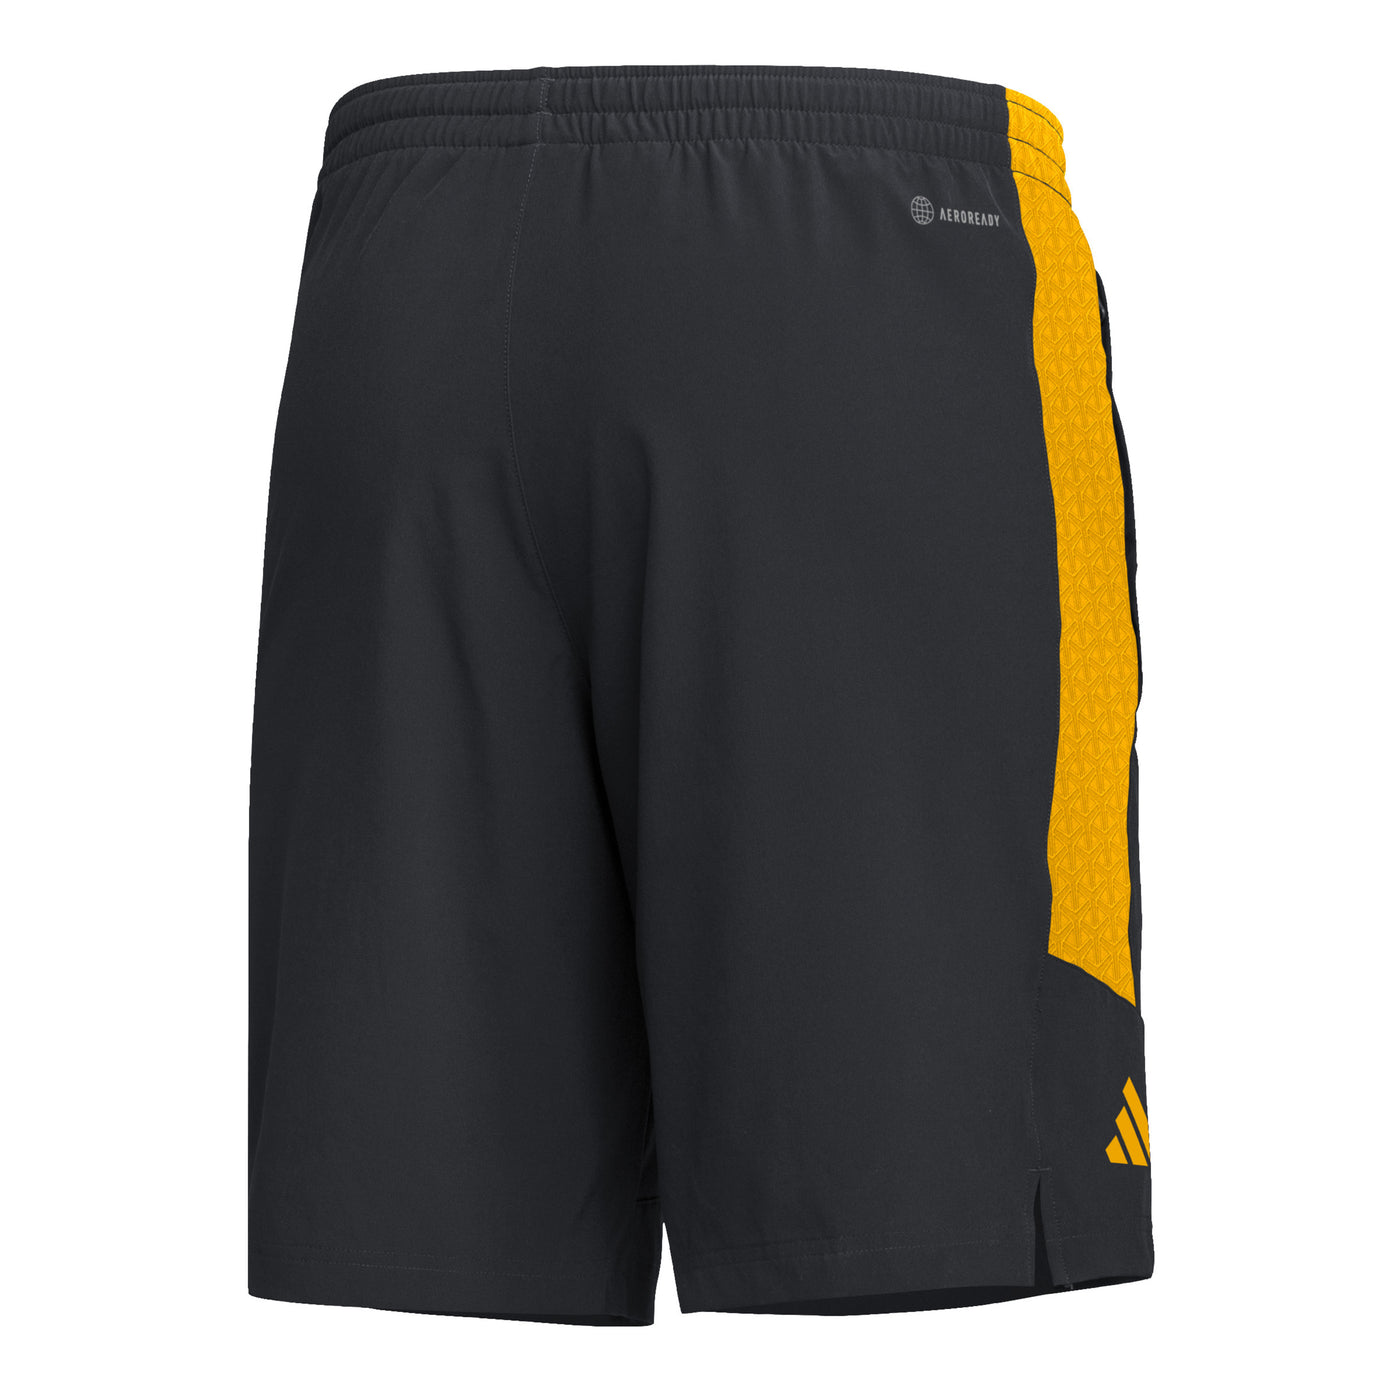 Backside of shorts including a gold adidas logo.